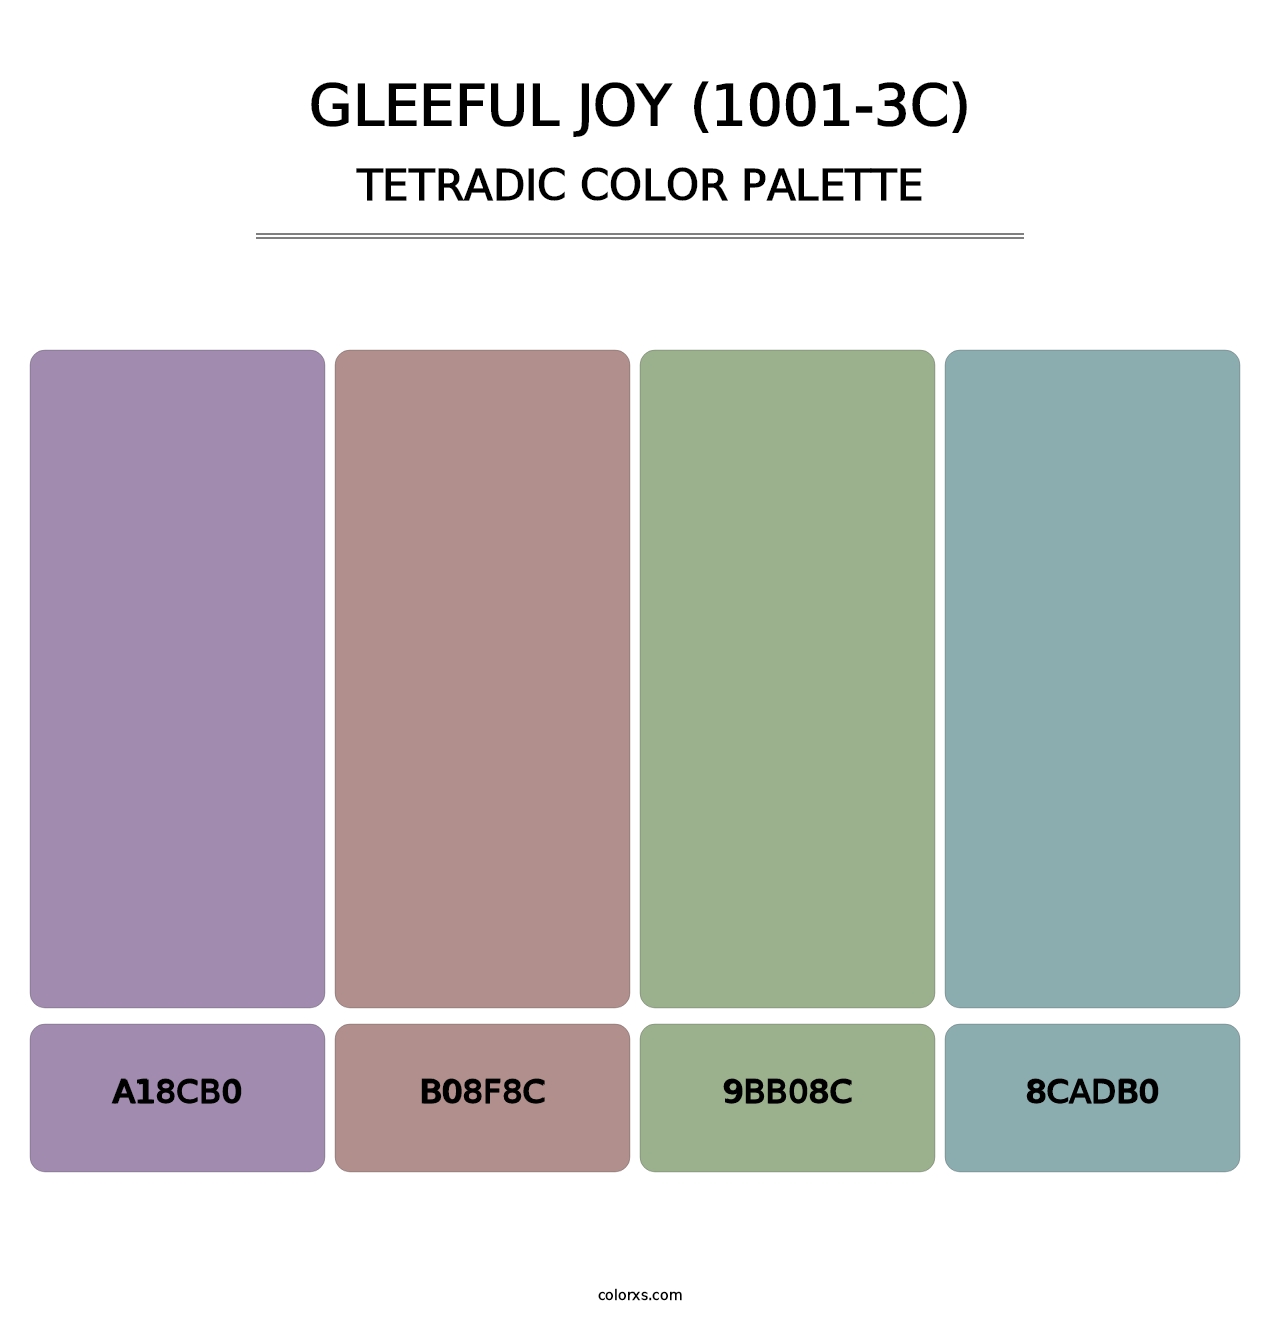 Gleeful Joy (1001-3C) - Tetradic Color Palette